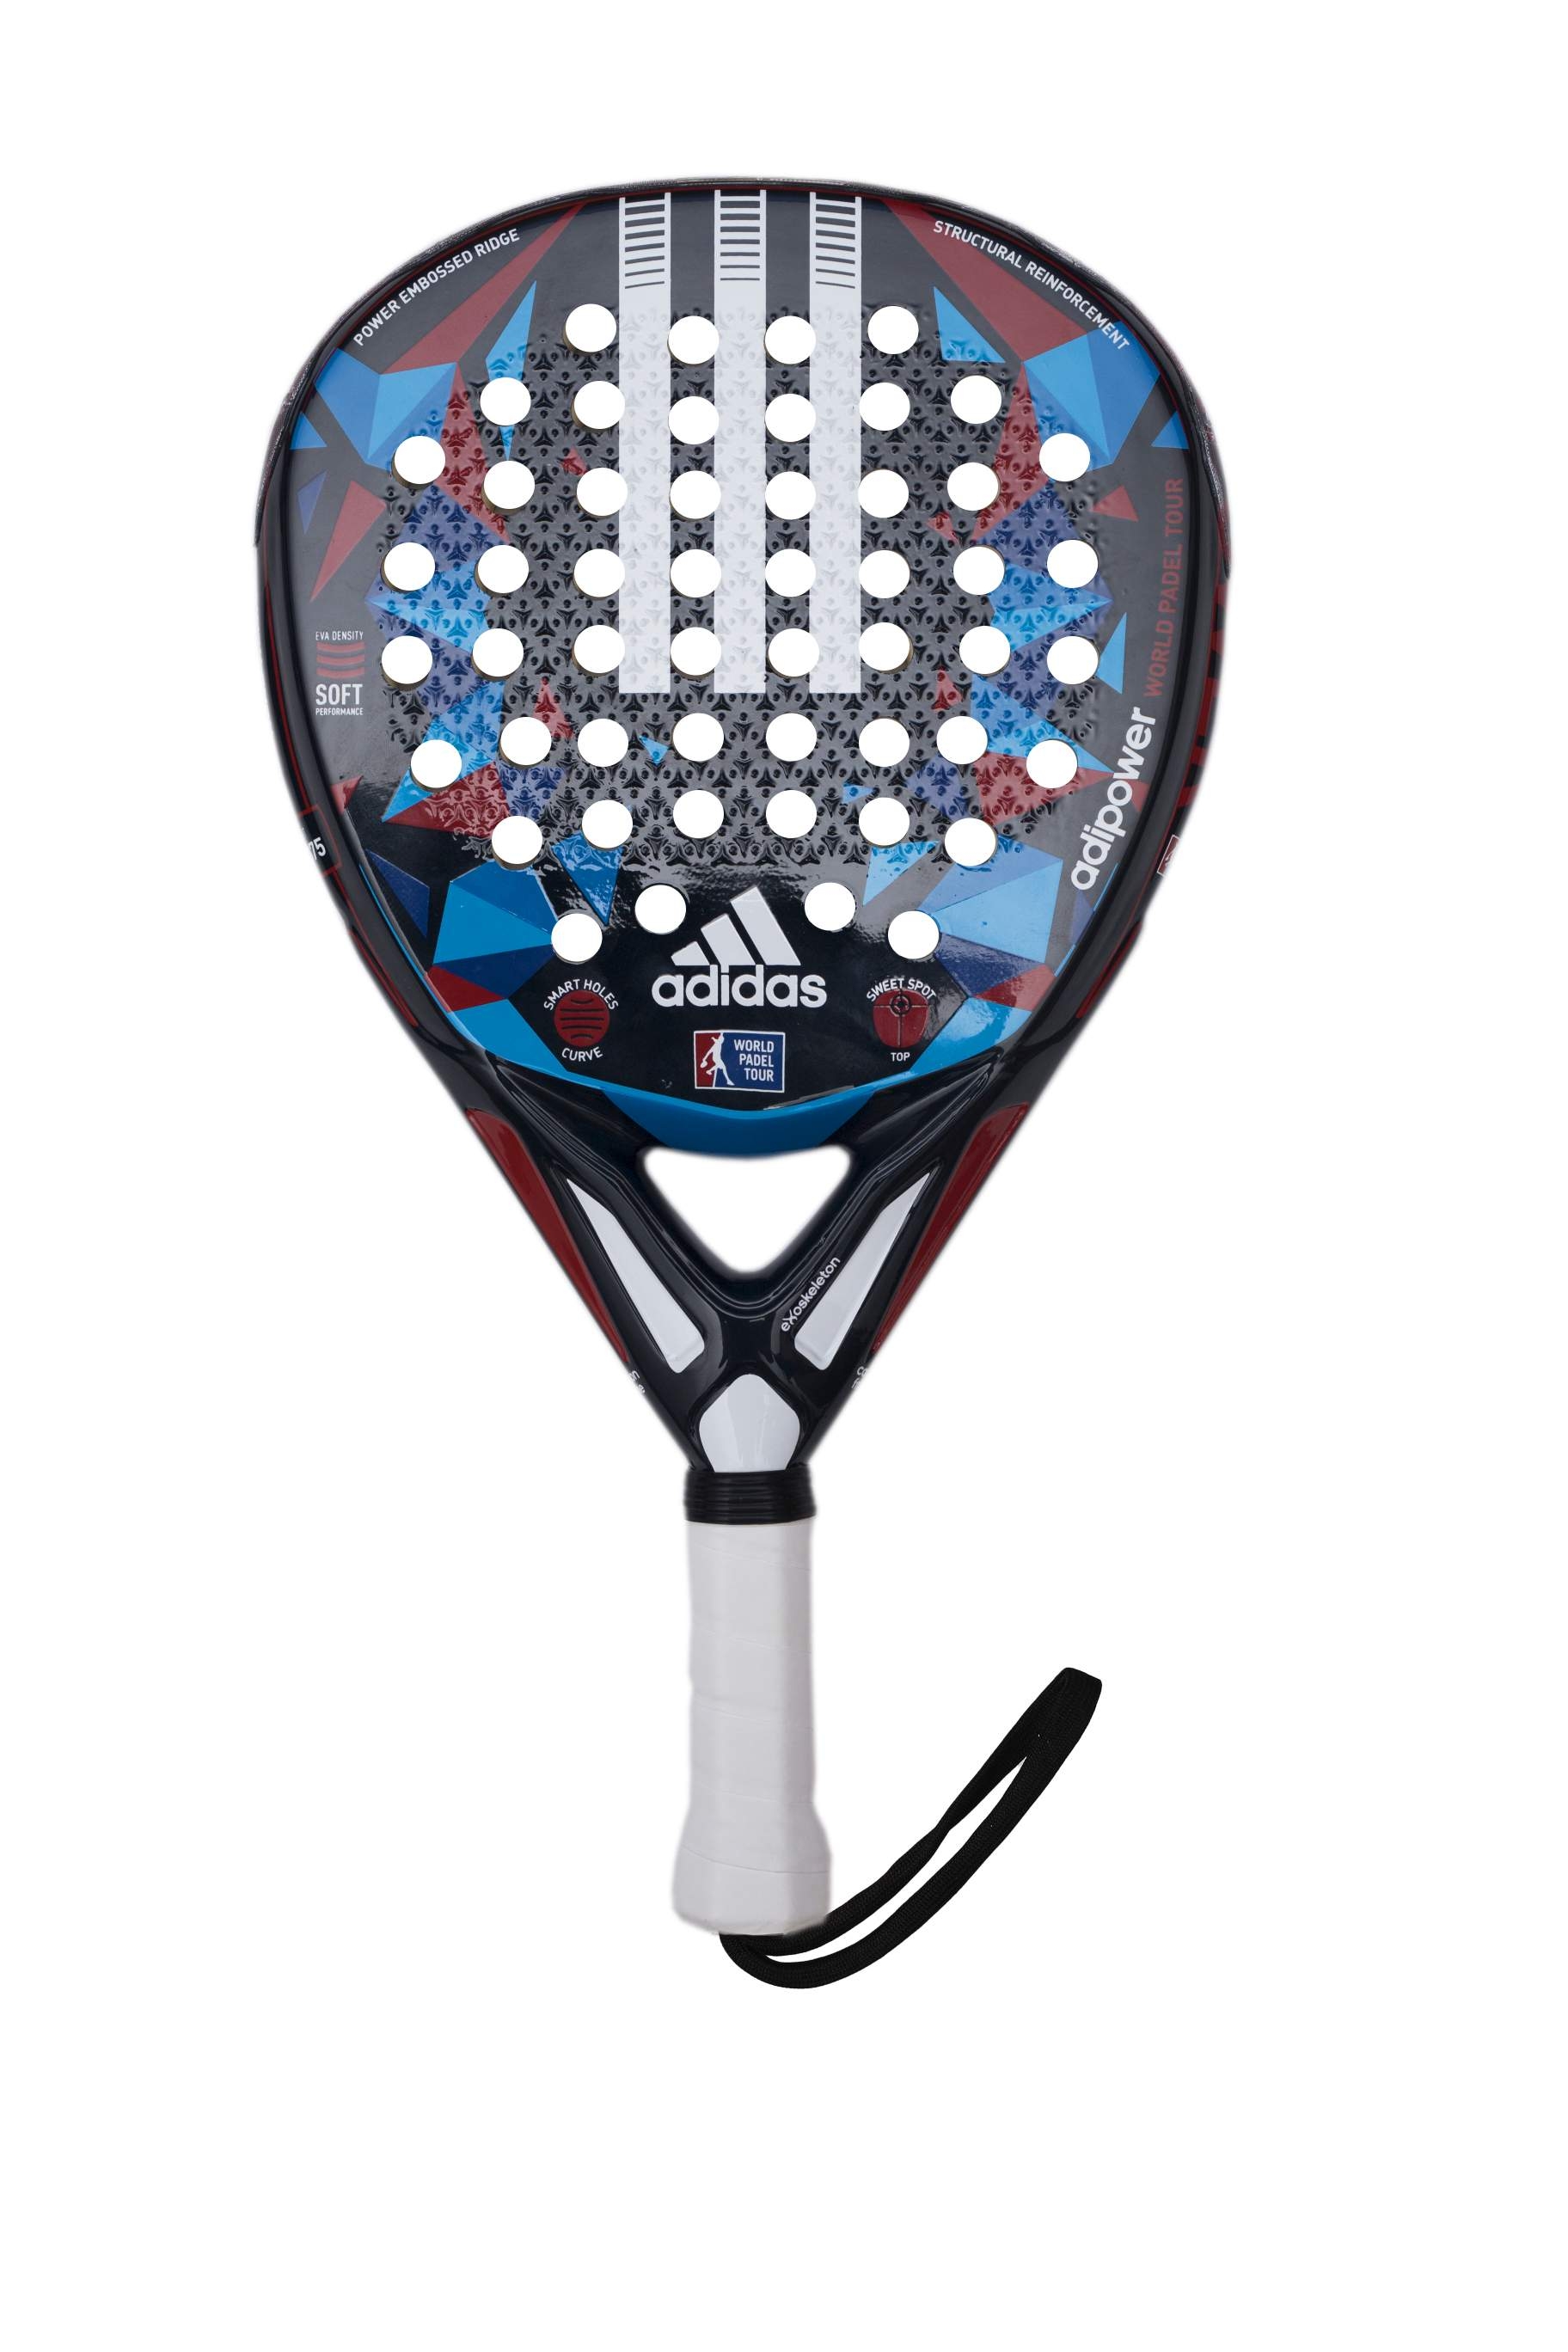 Adidas Adipower WPT padel racket